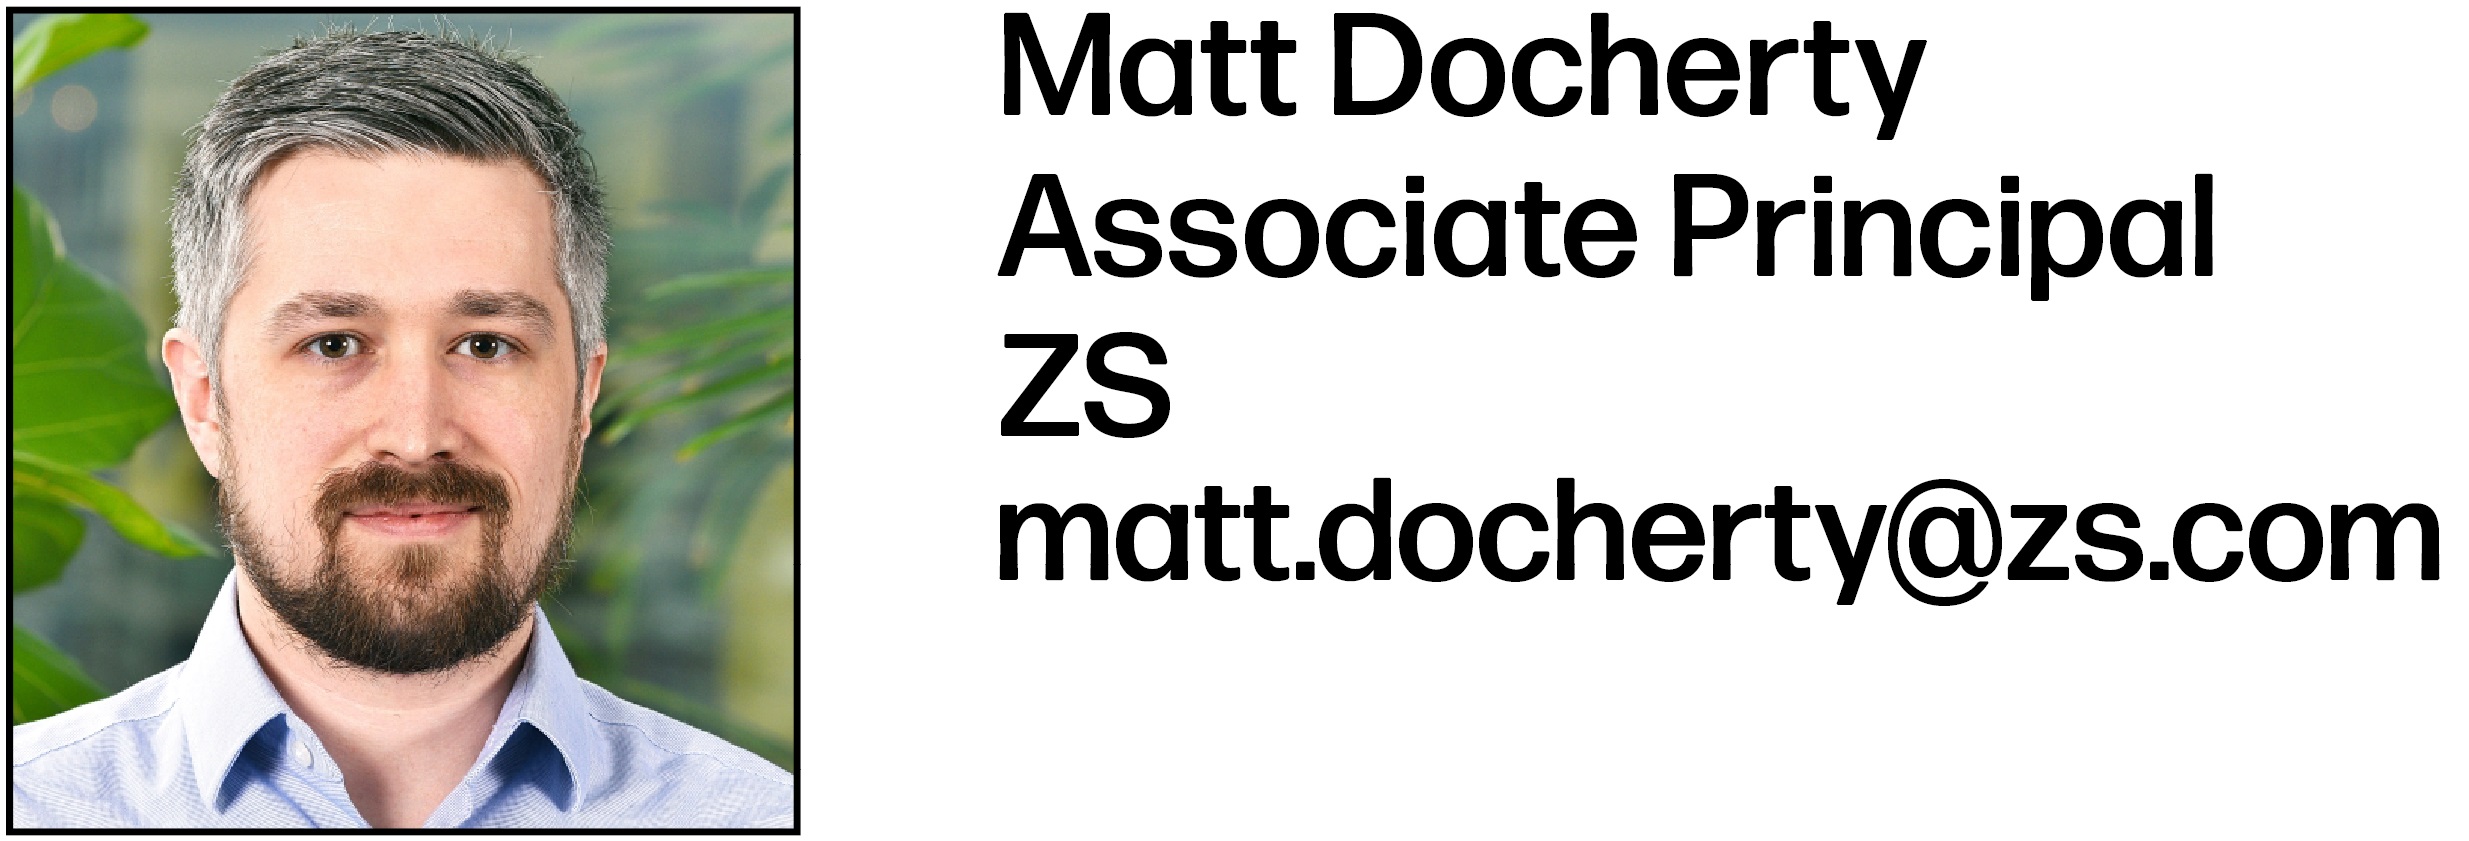 Headshot of Matt Docherty, who is listed as Associate Principal of ZS. His email is matt.docherty@zs.com.